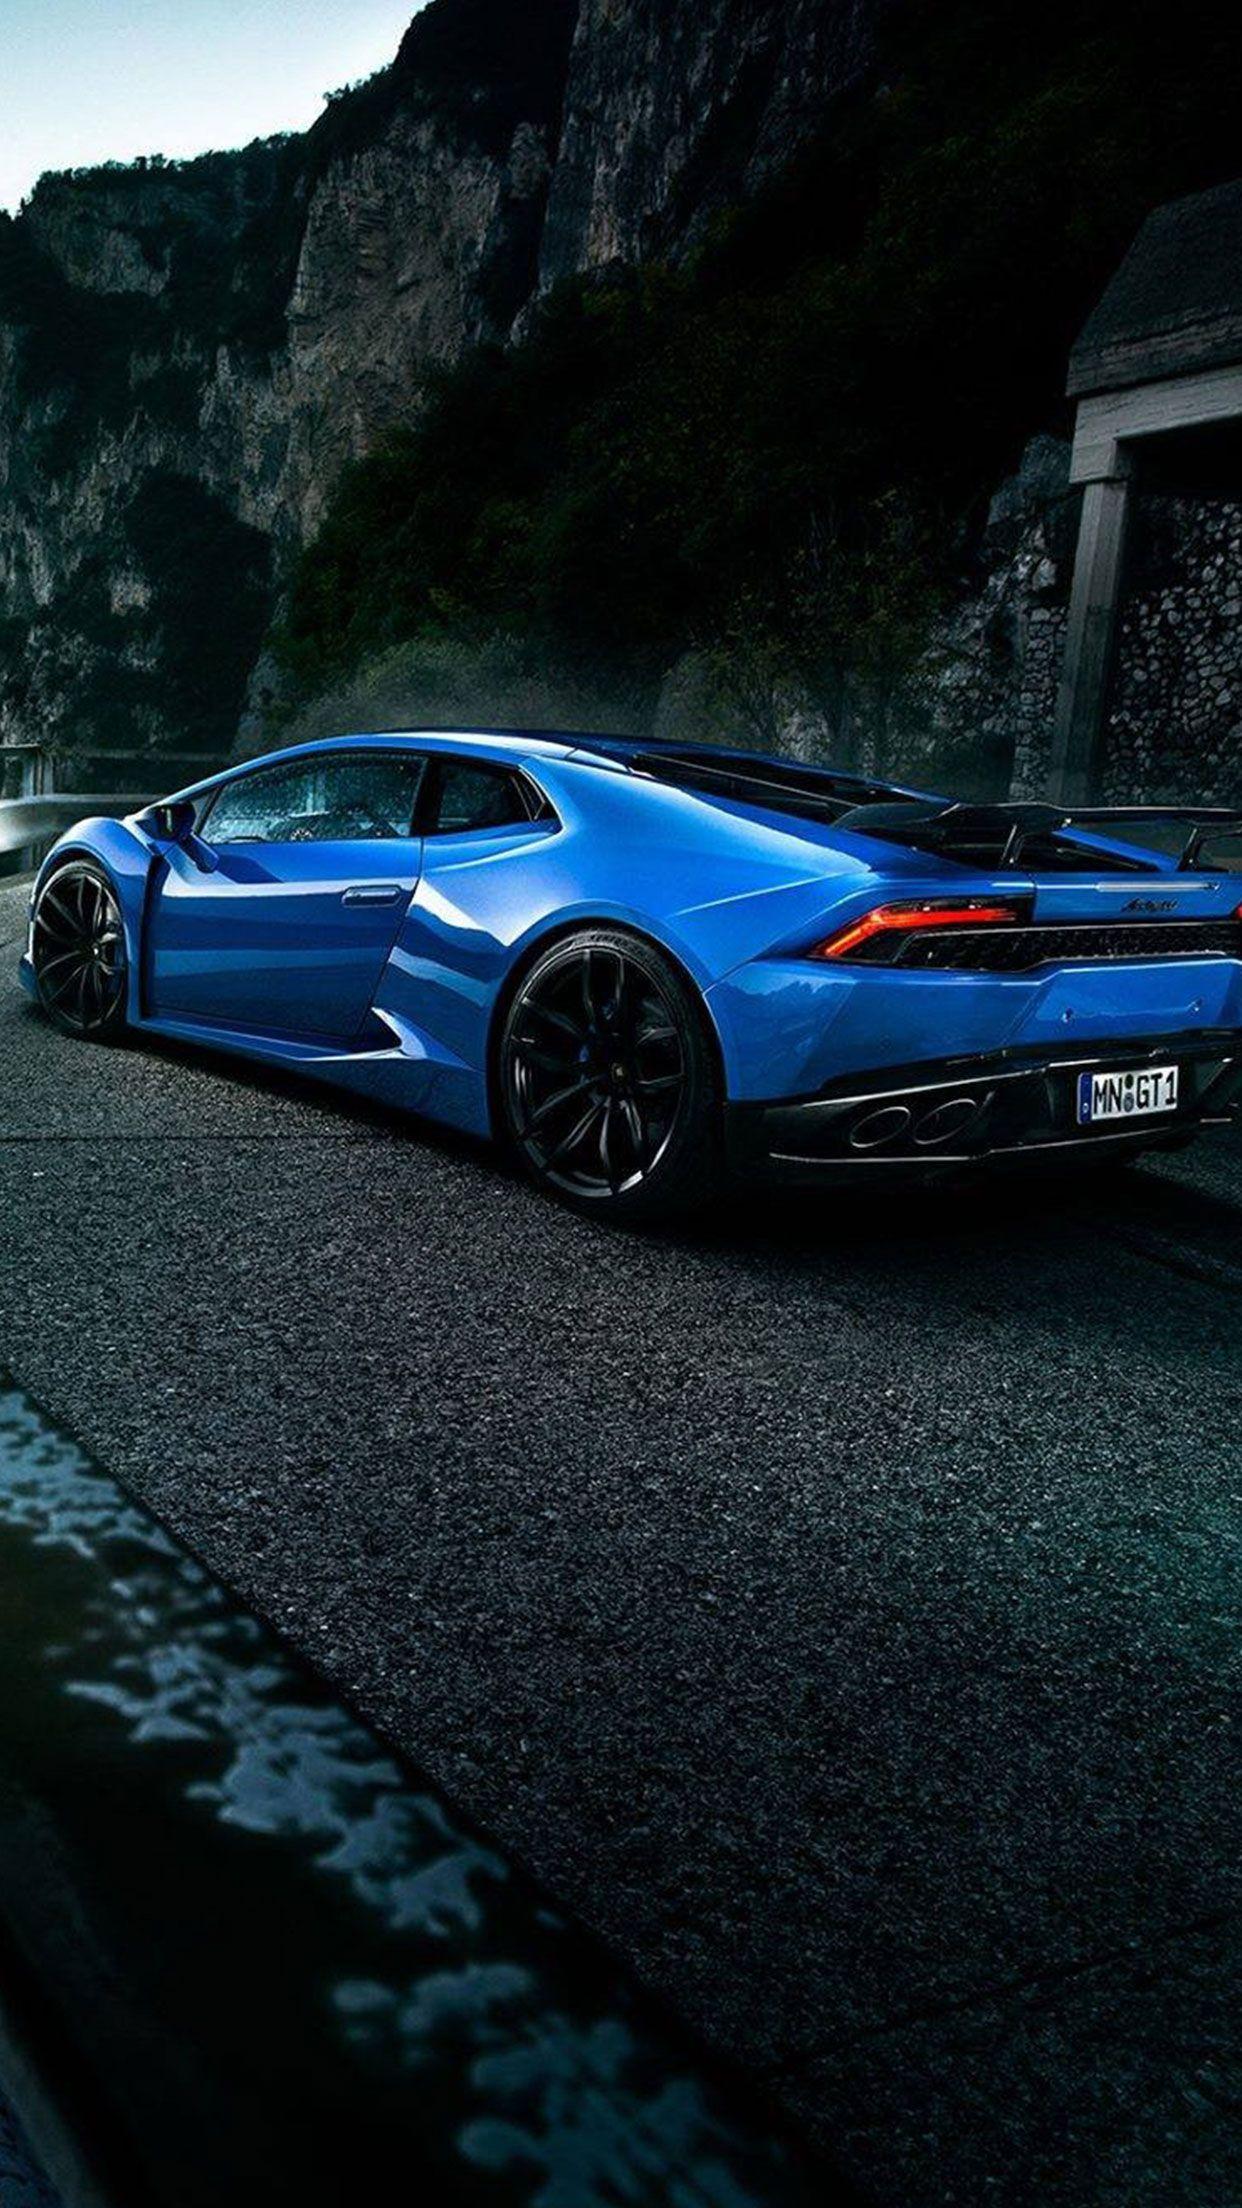 Blue Lamborghini car wallpaper #iPhone #android #blue